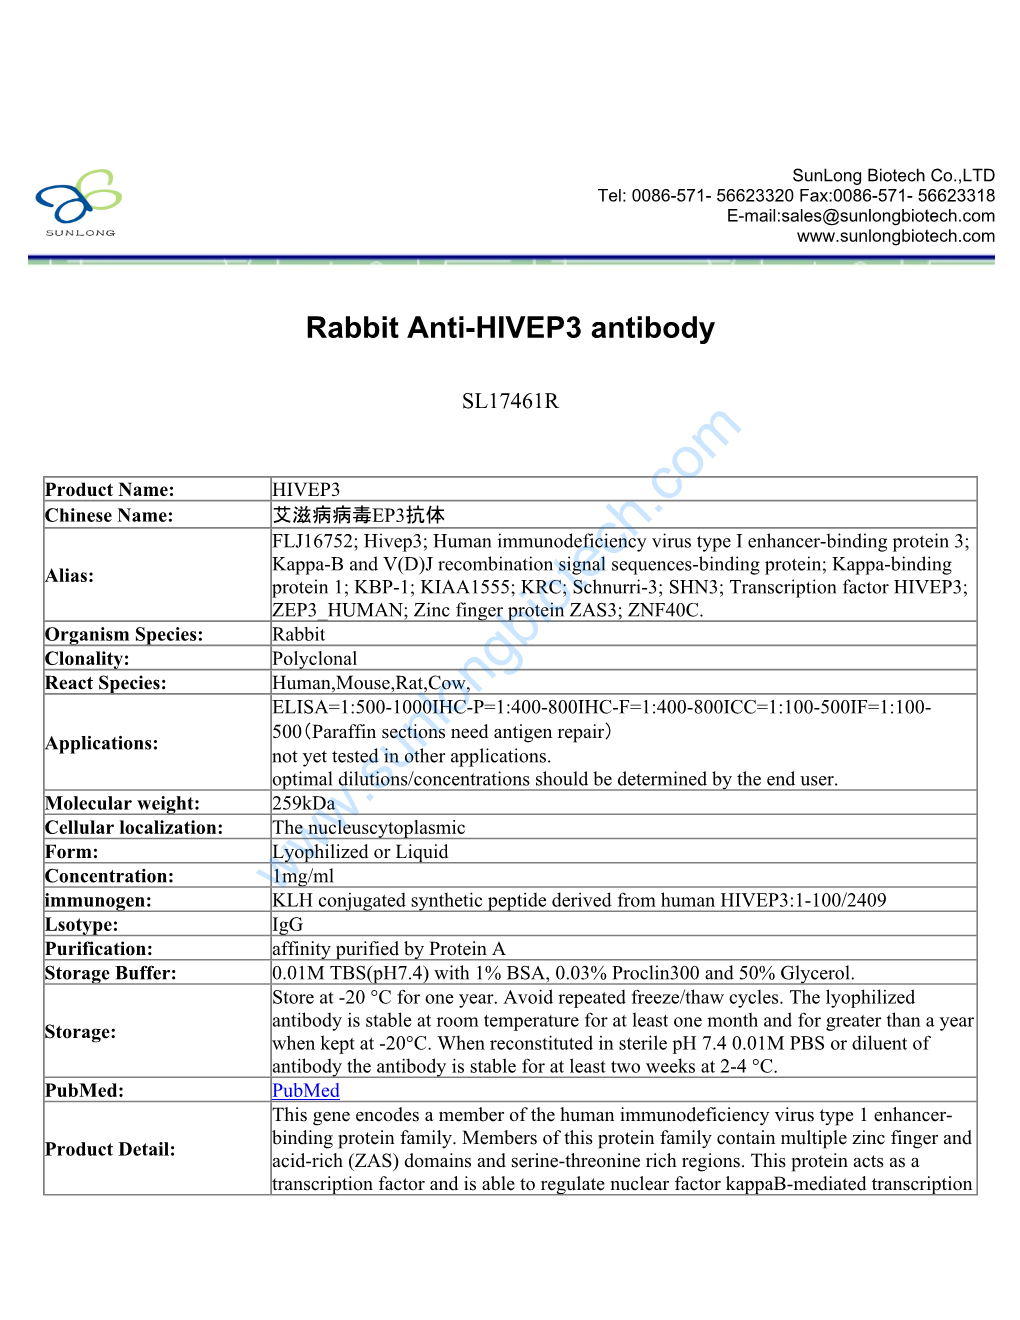 Rabbit Anti-HIVEP3 Antibody-SL17461R